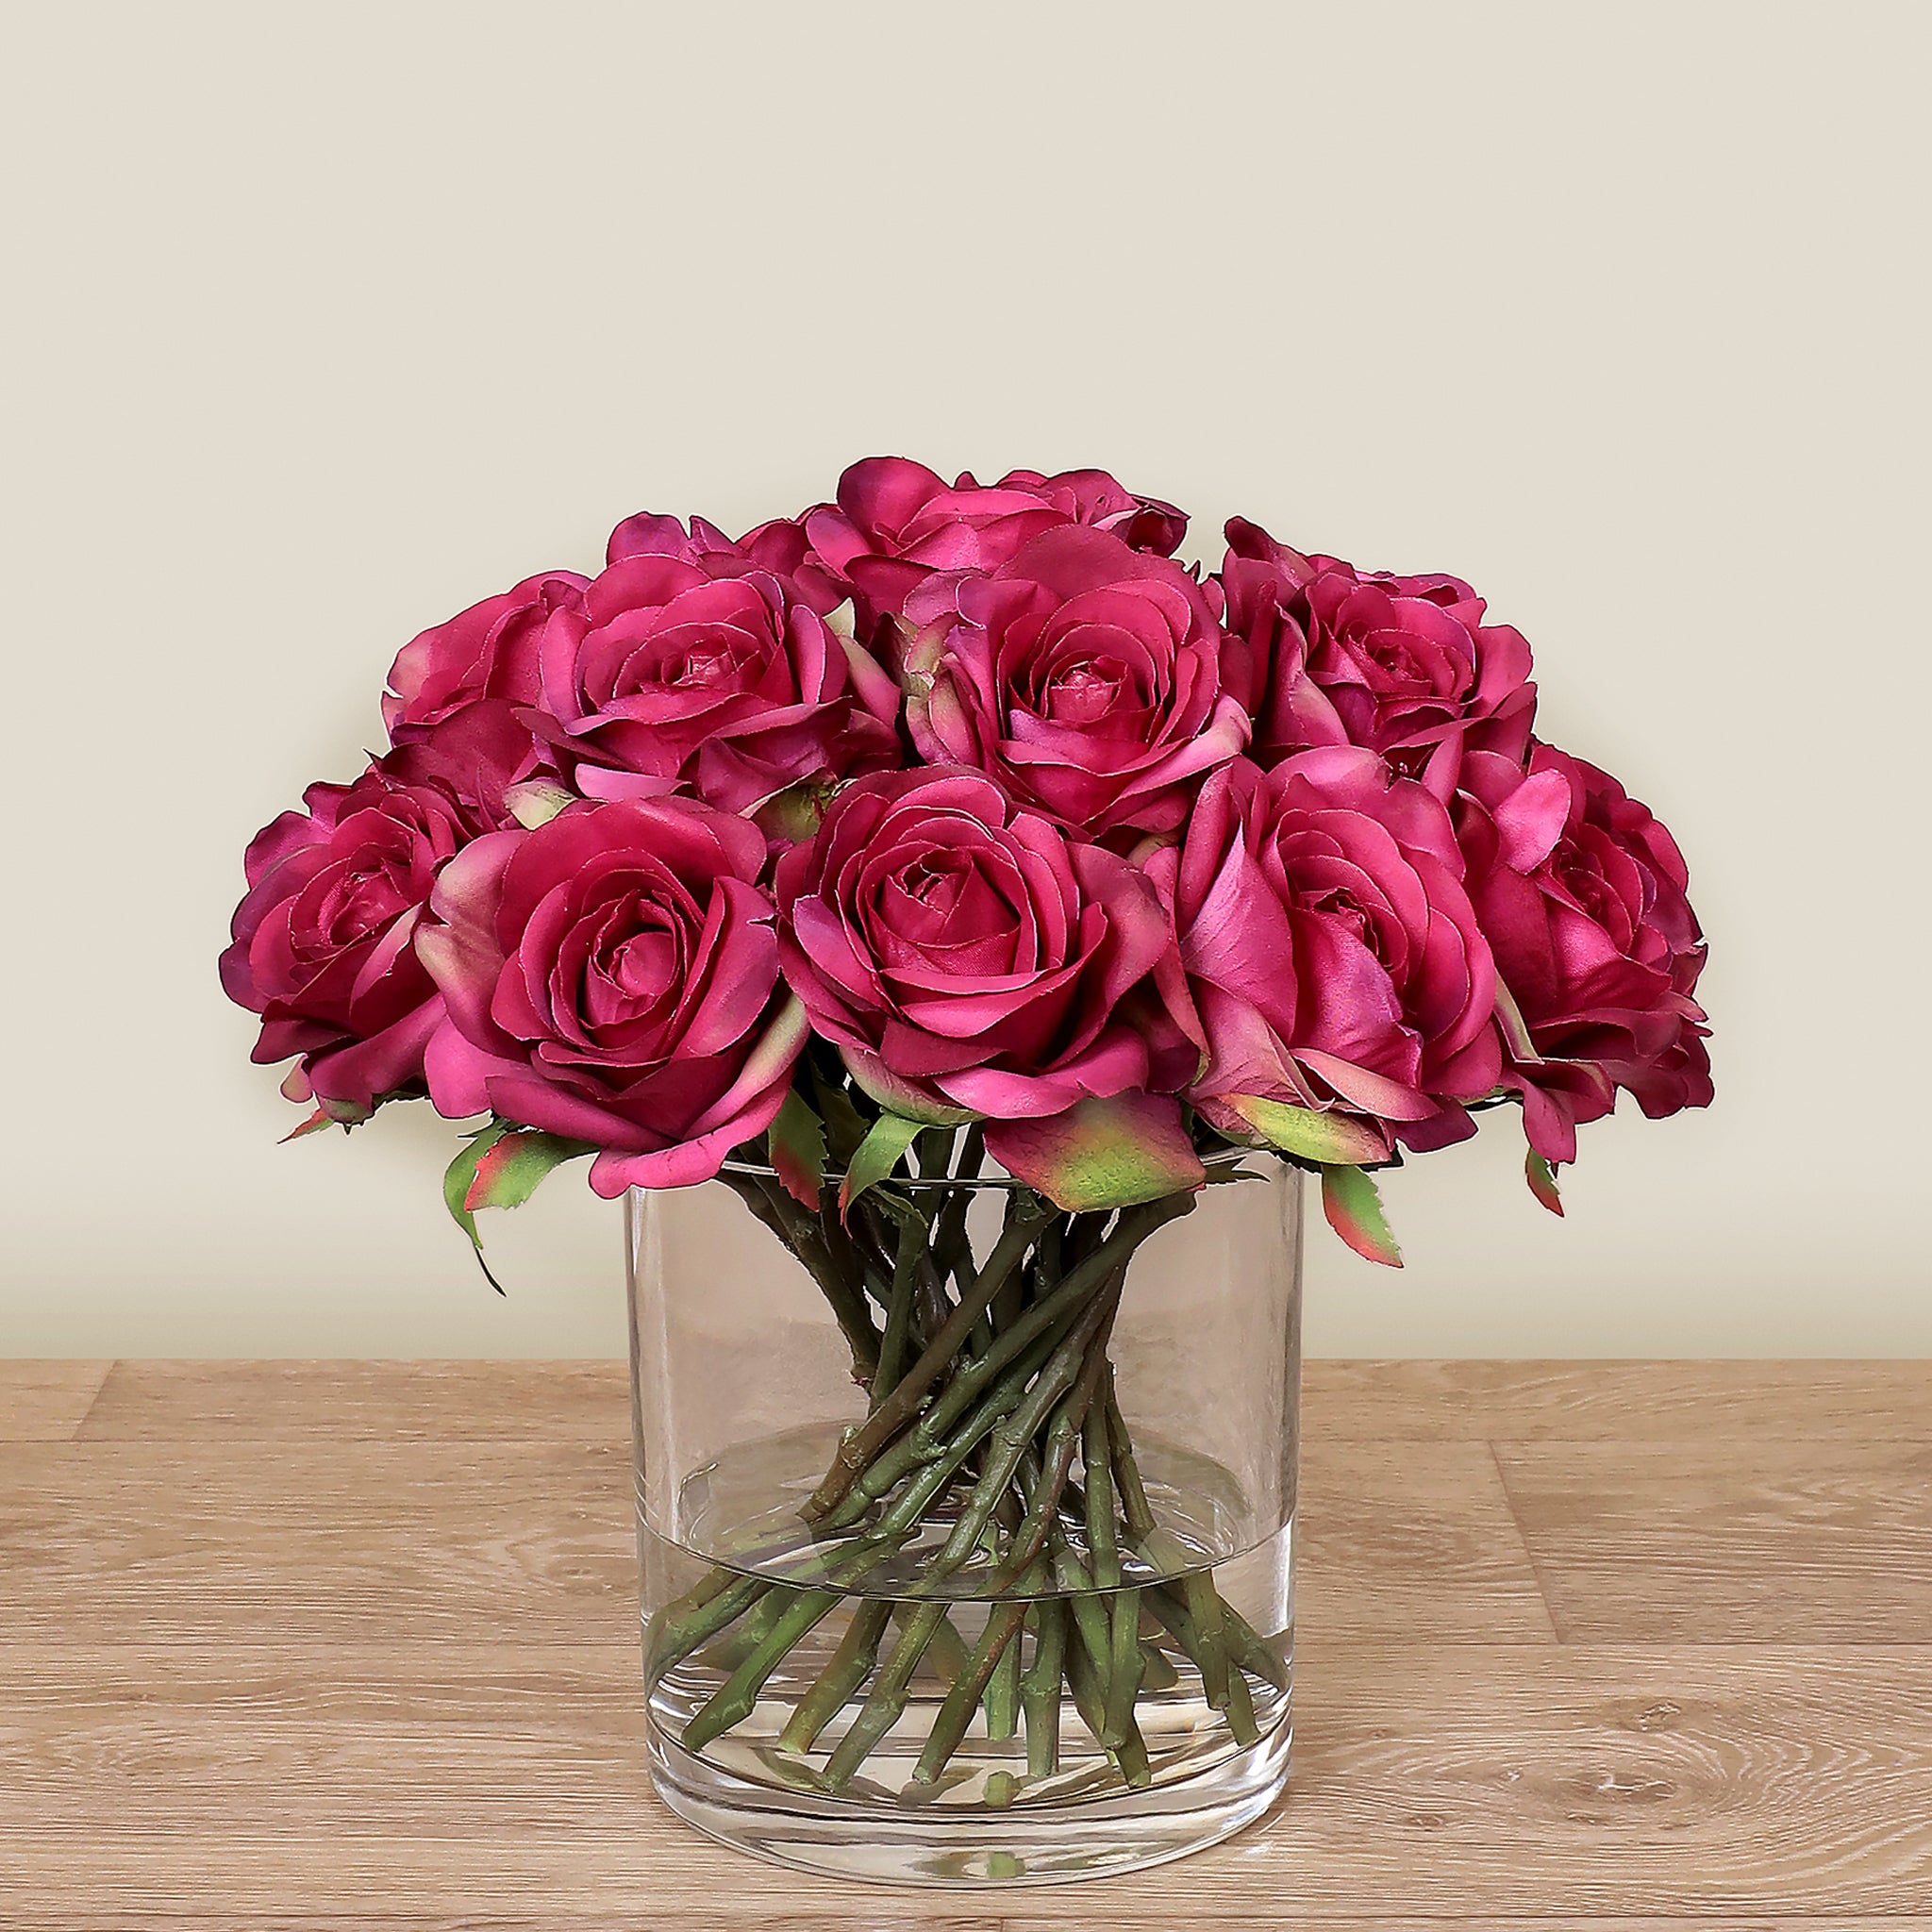 Artificial Rose Arrangement in Glass Vase